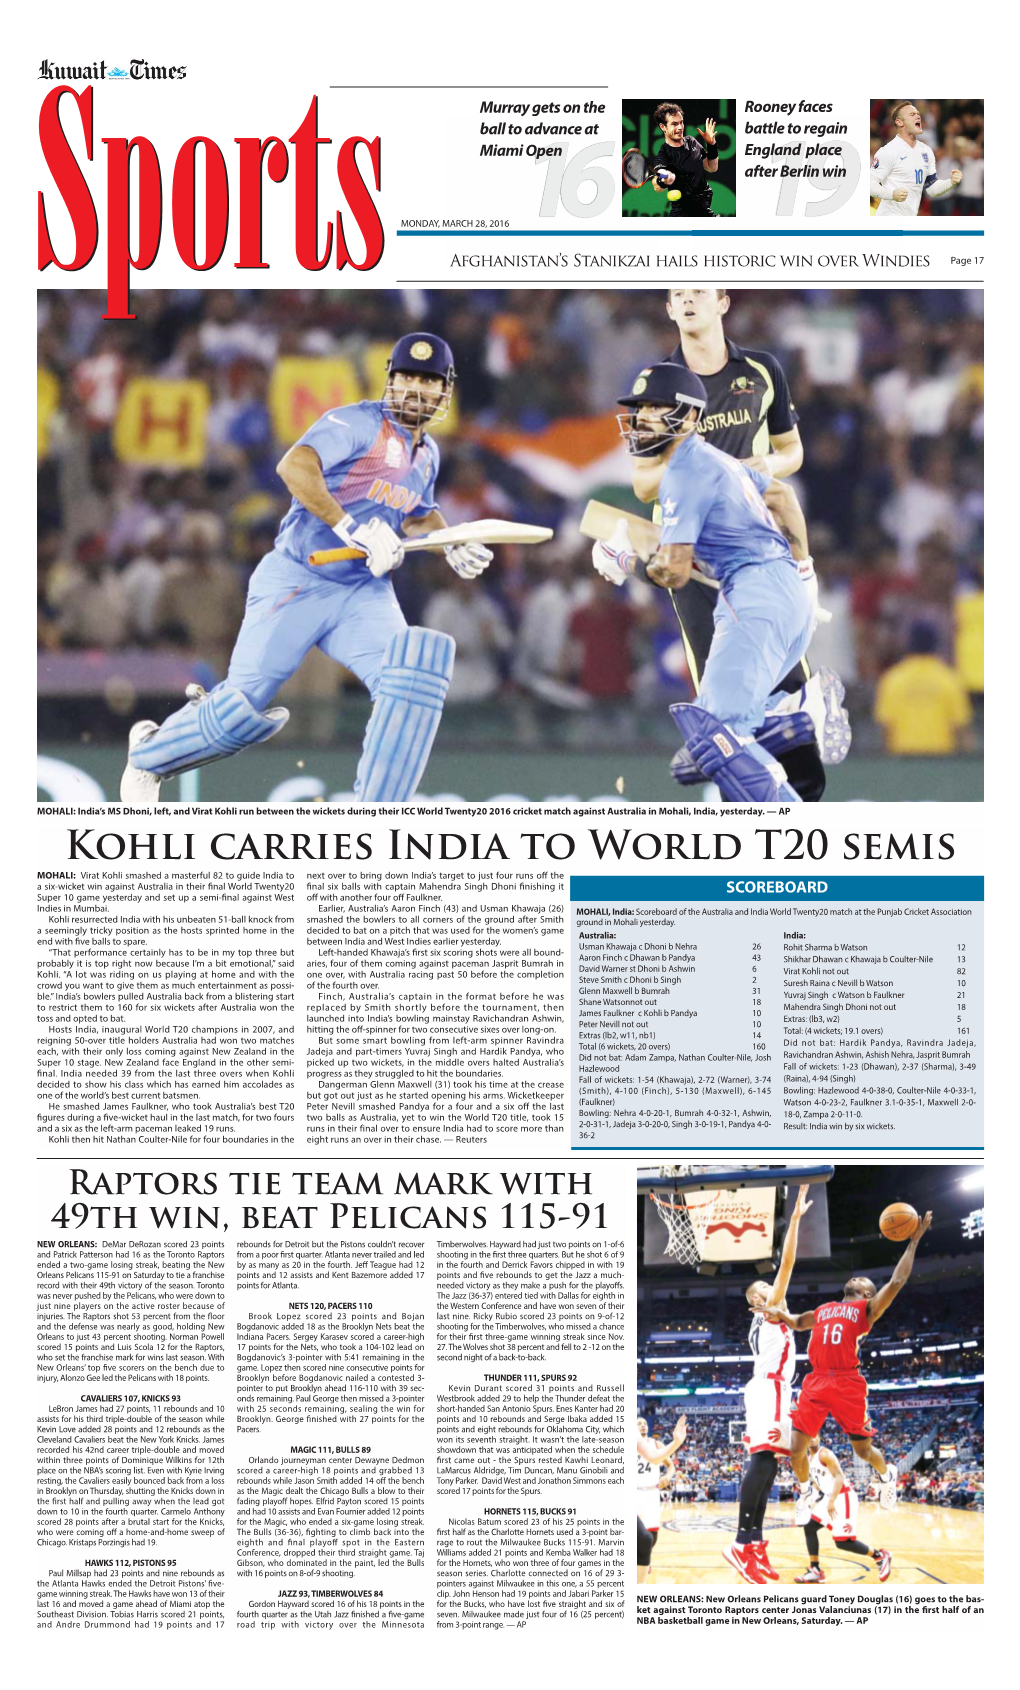 Kohli Carries India to World T20 Semis